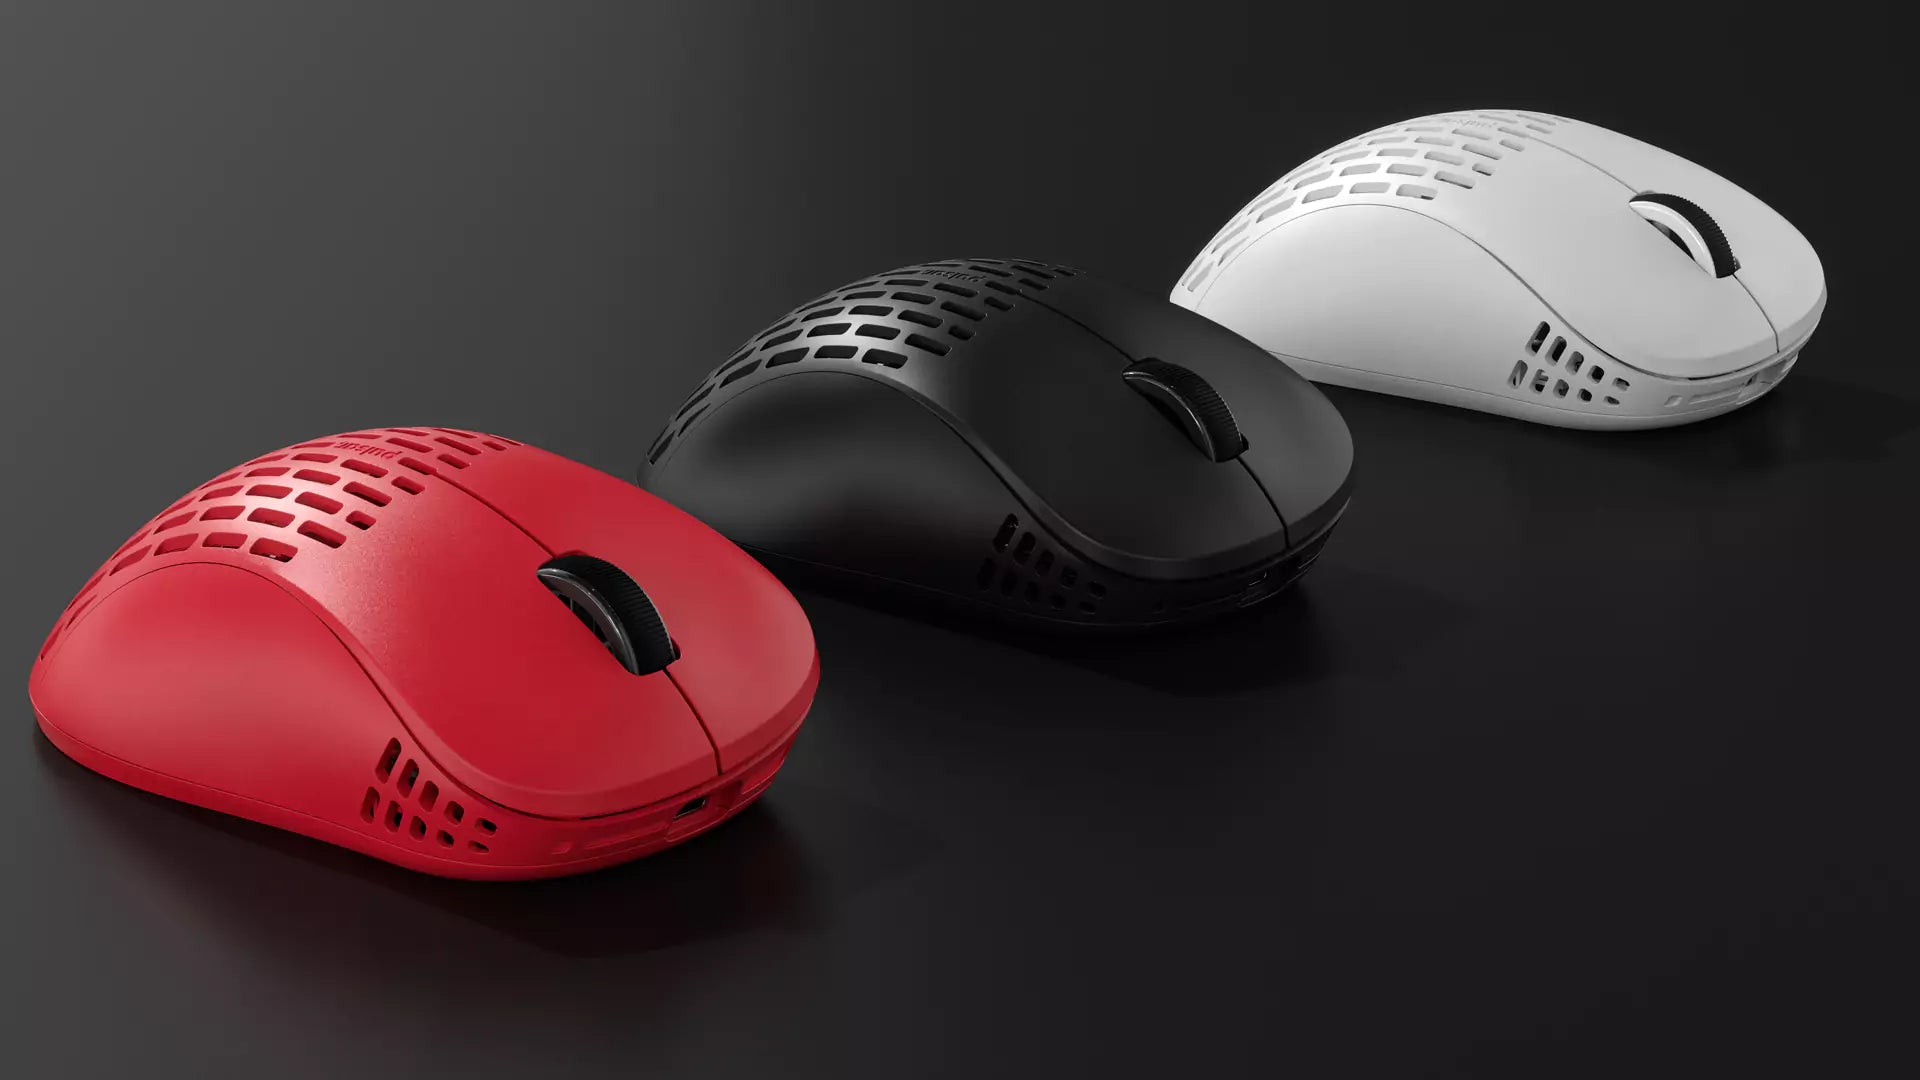 Xlite V2 mini Wireless Gaming Mouse – Pulsar Gaming Gears Japan